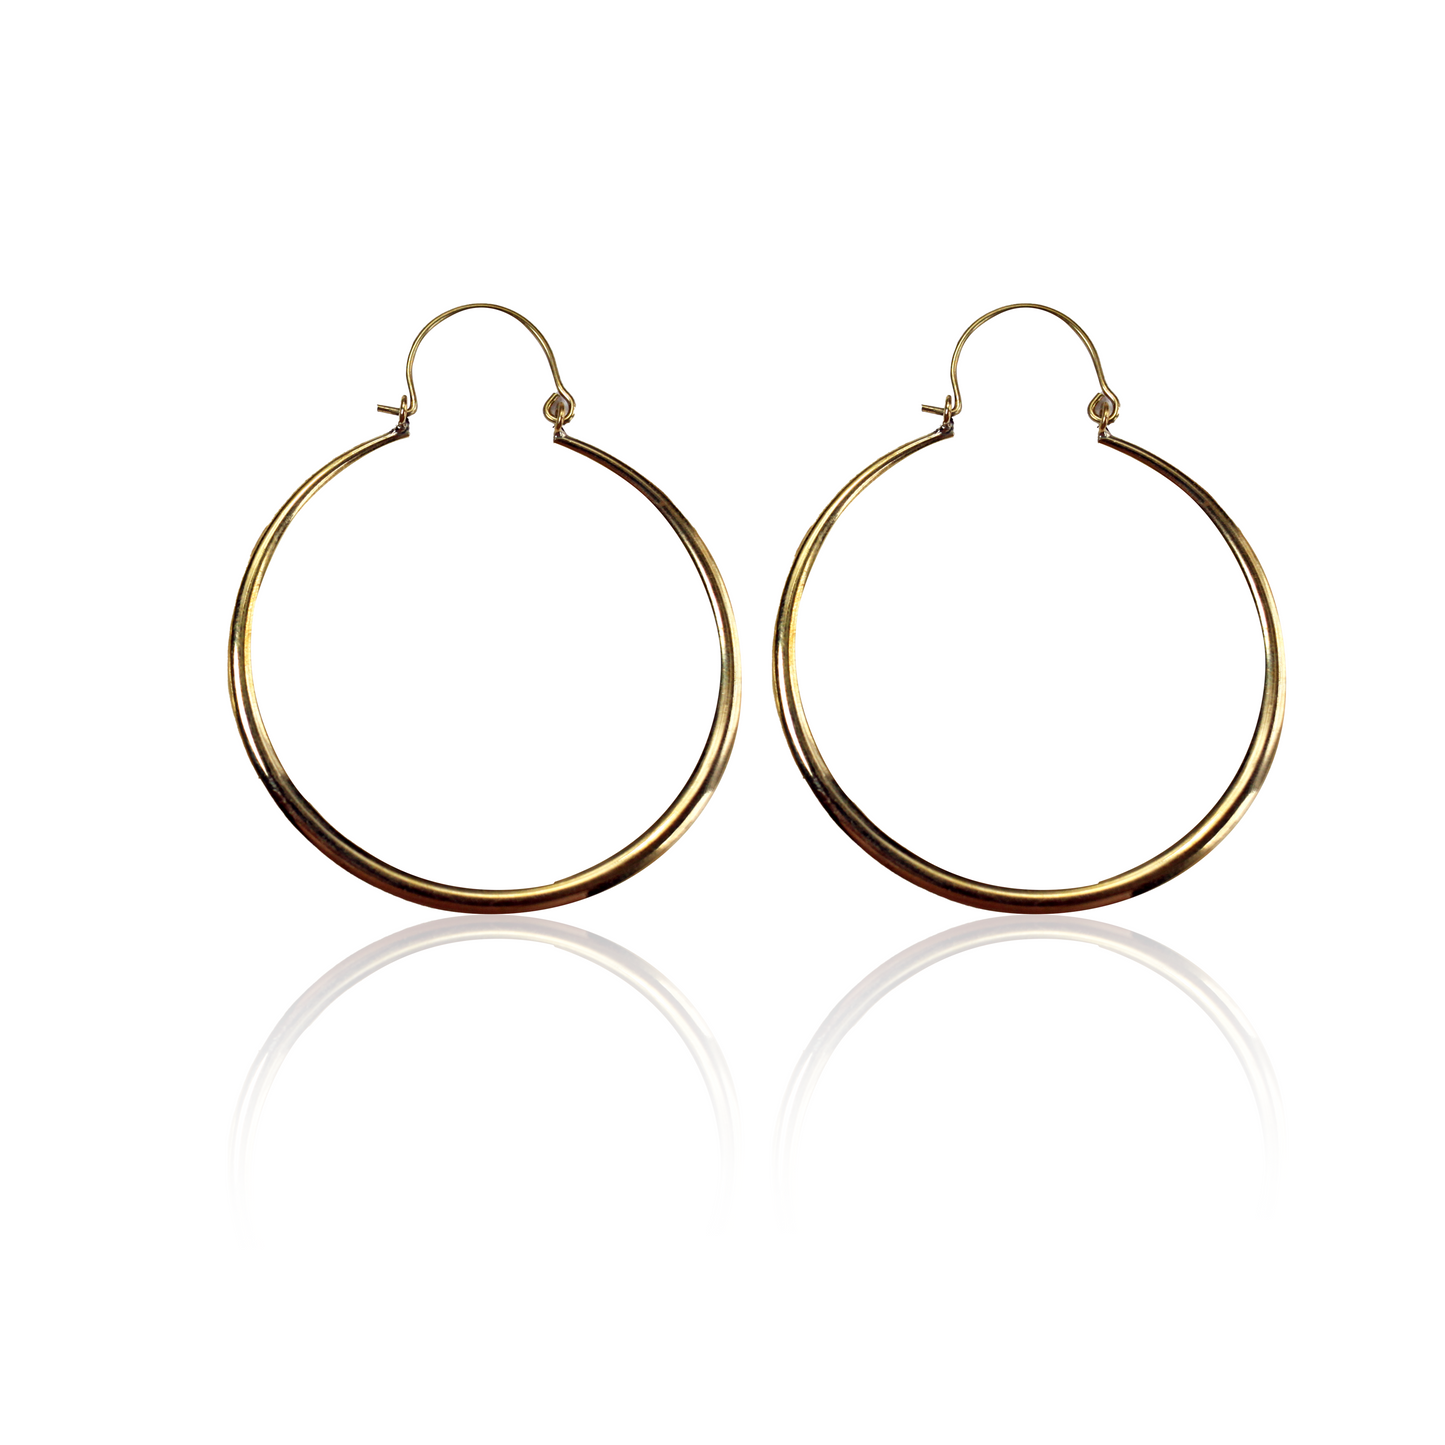 Classic pair of shiny brass hoop earrings